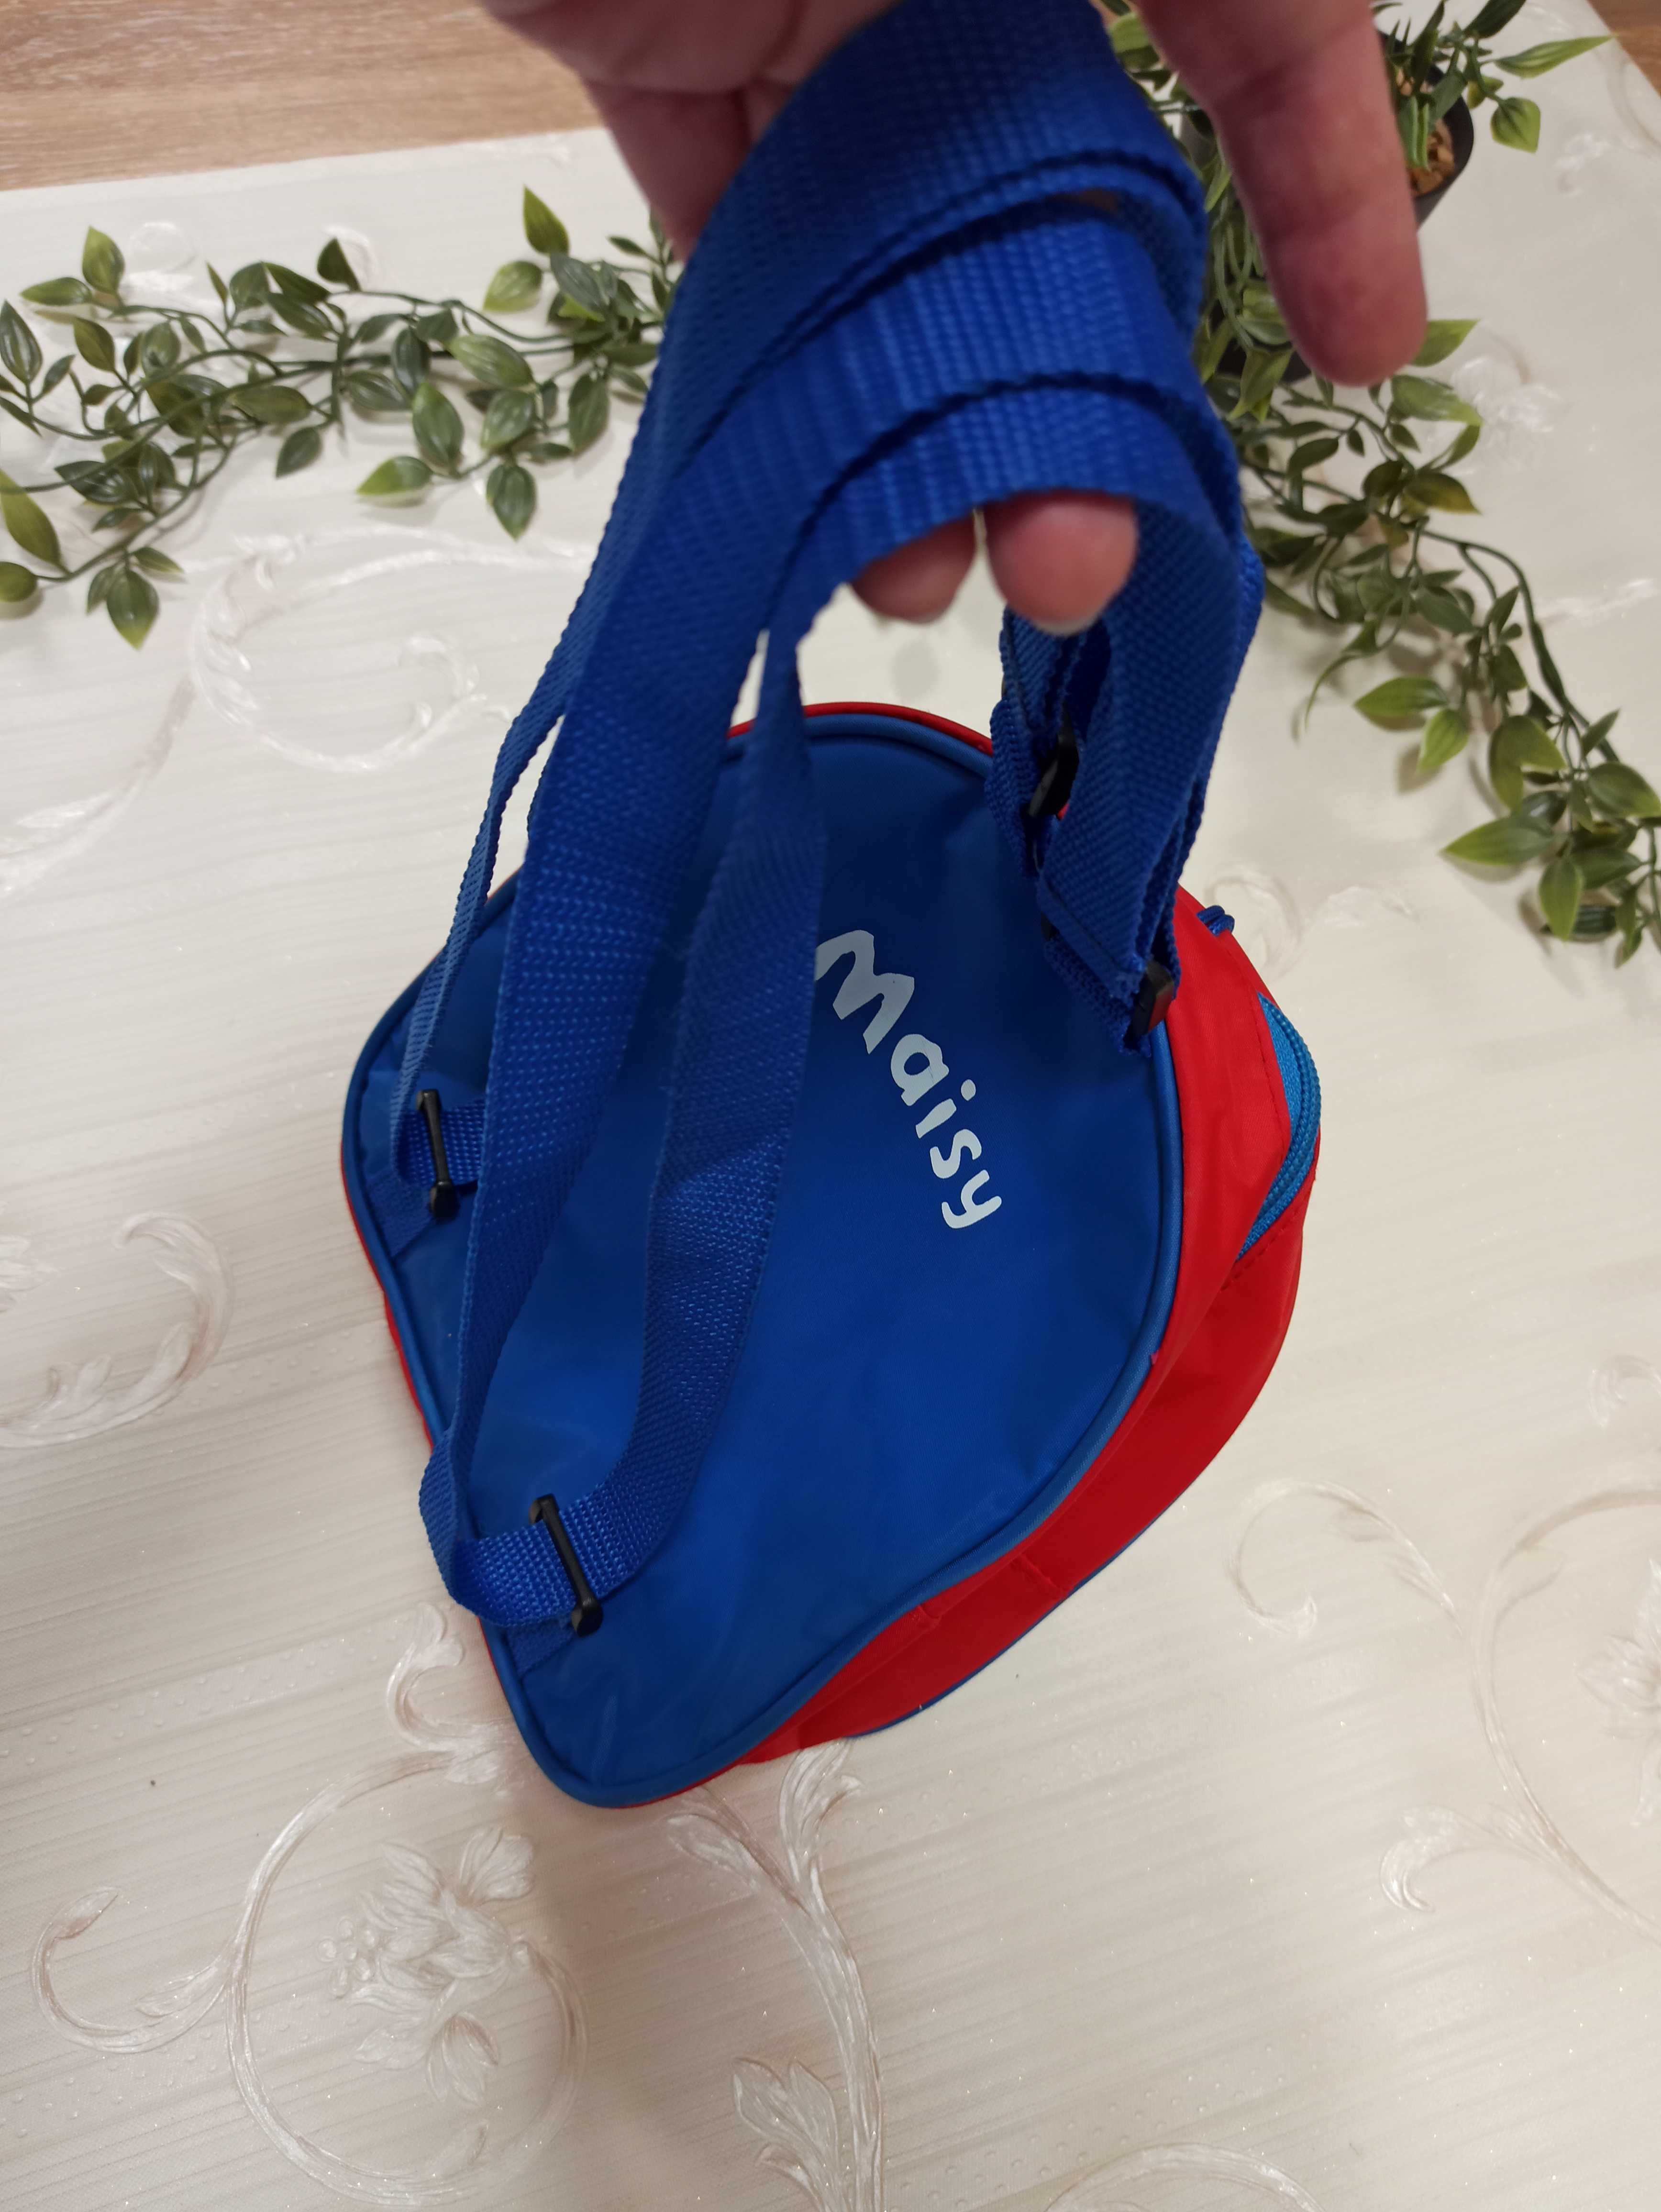 Рюкзак с мышкой, ранец для ребёнка 1-3 лет Shreds Lincoln